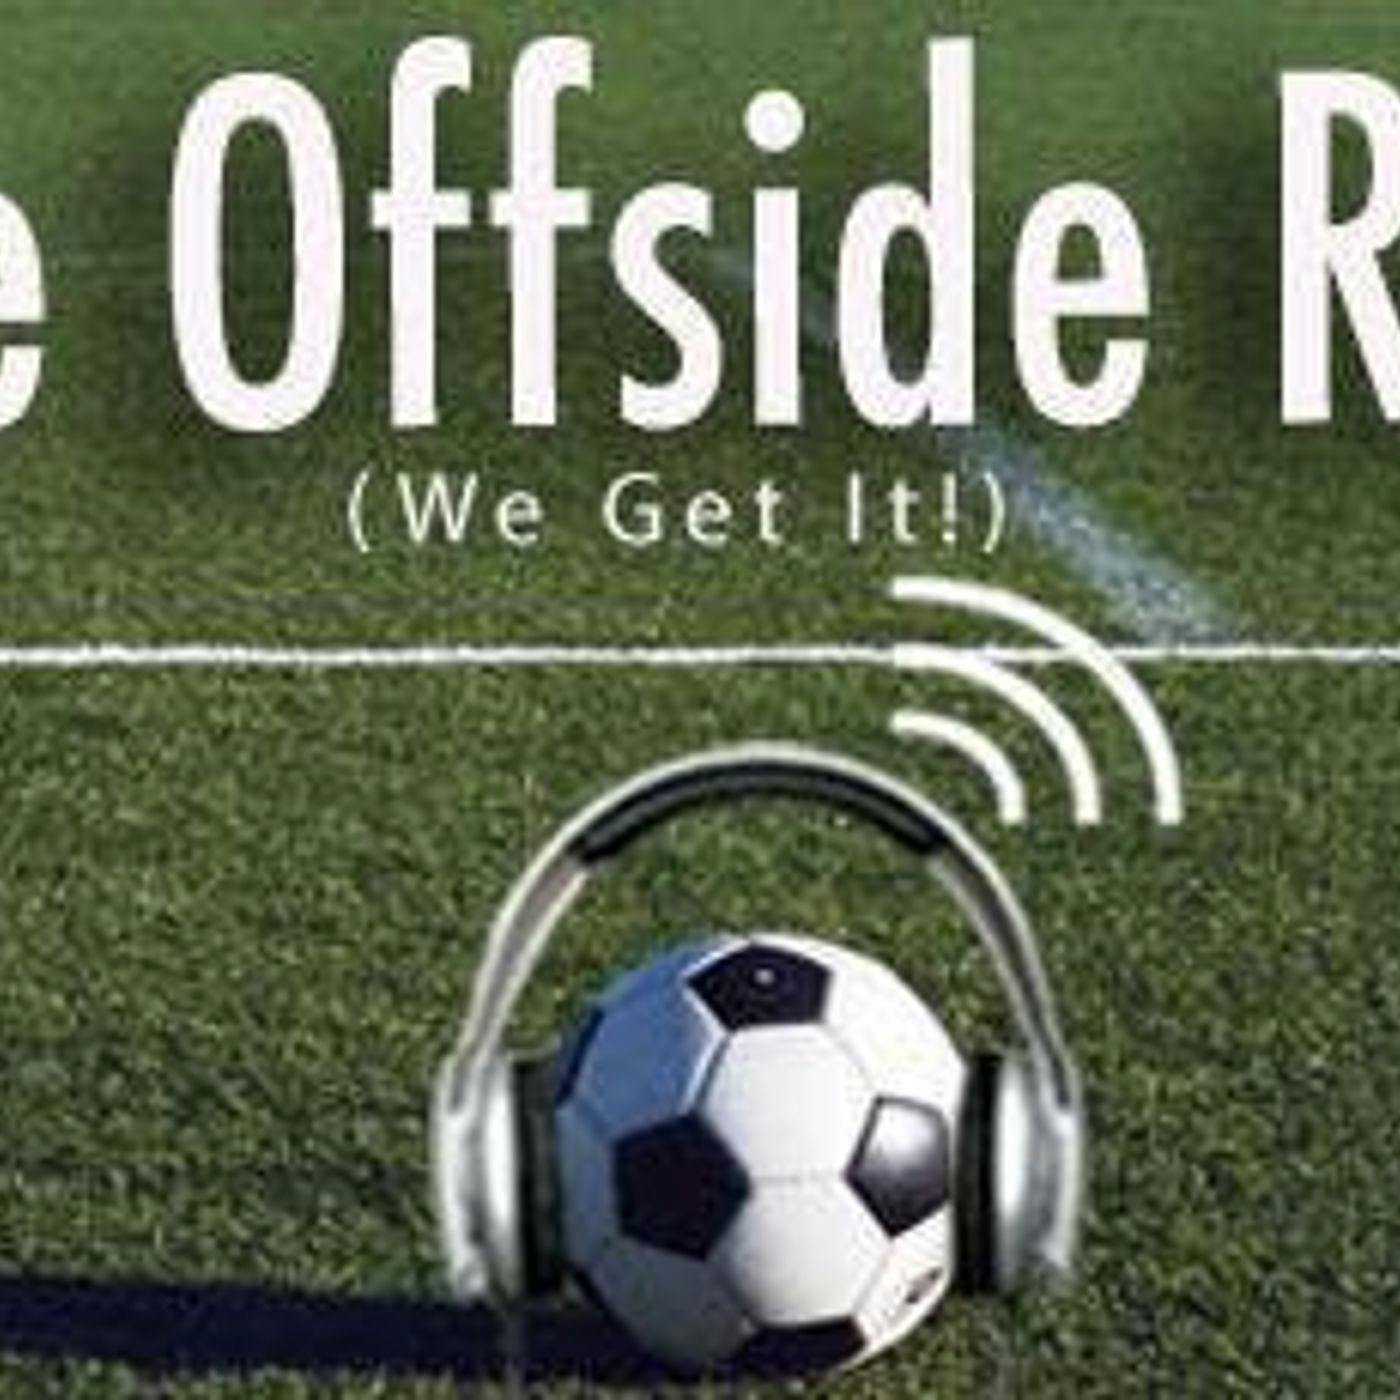 The Offside Rule 2013/14 Episode 34